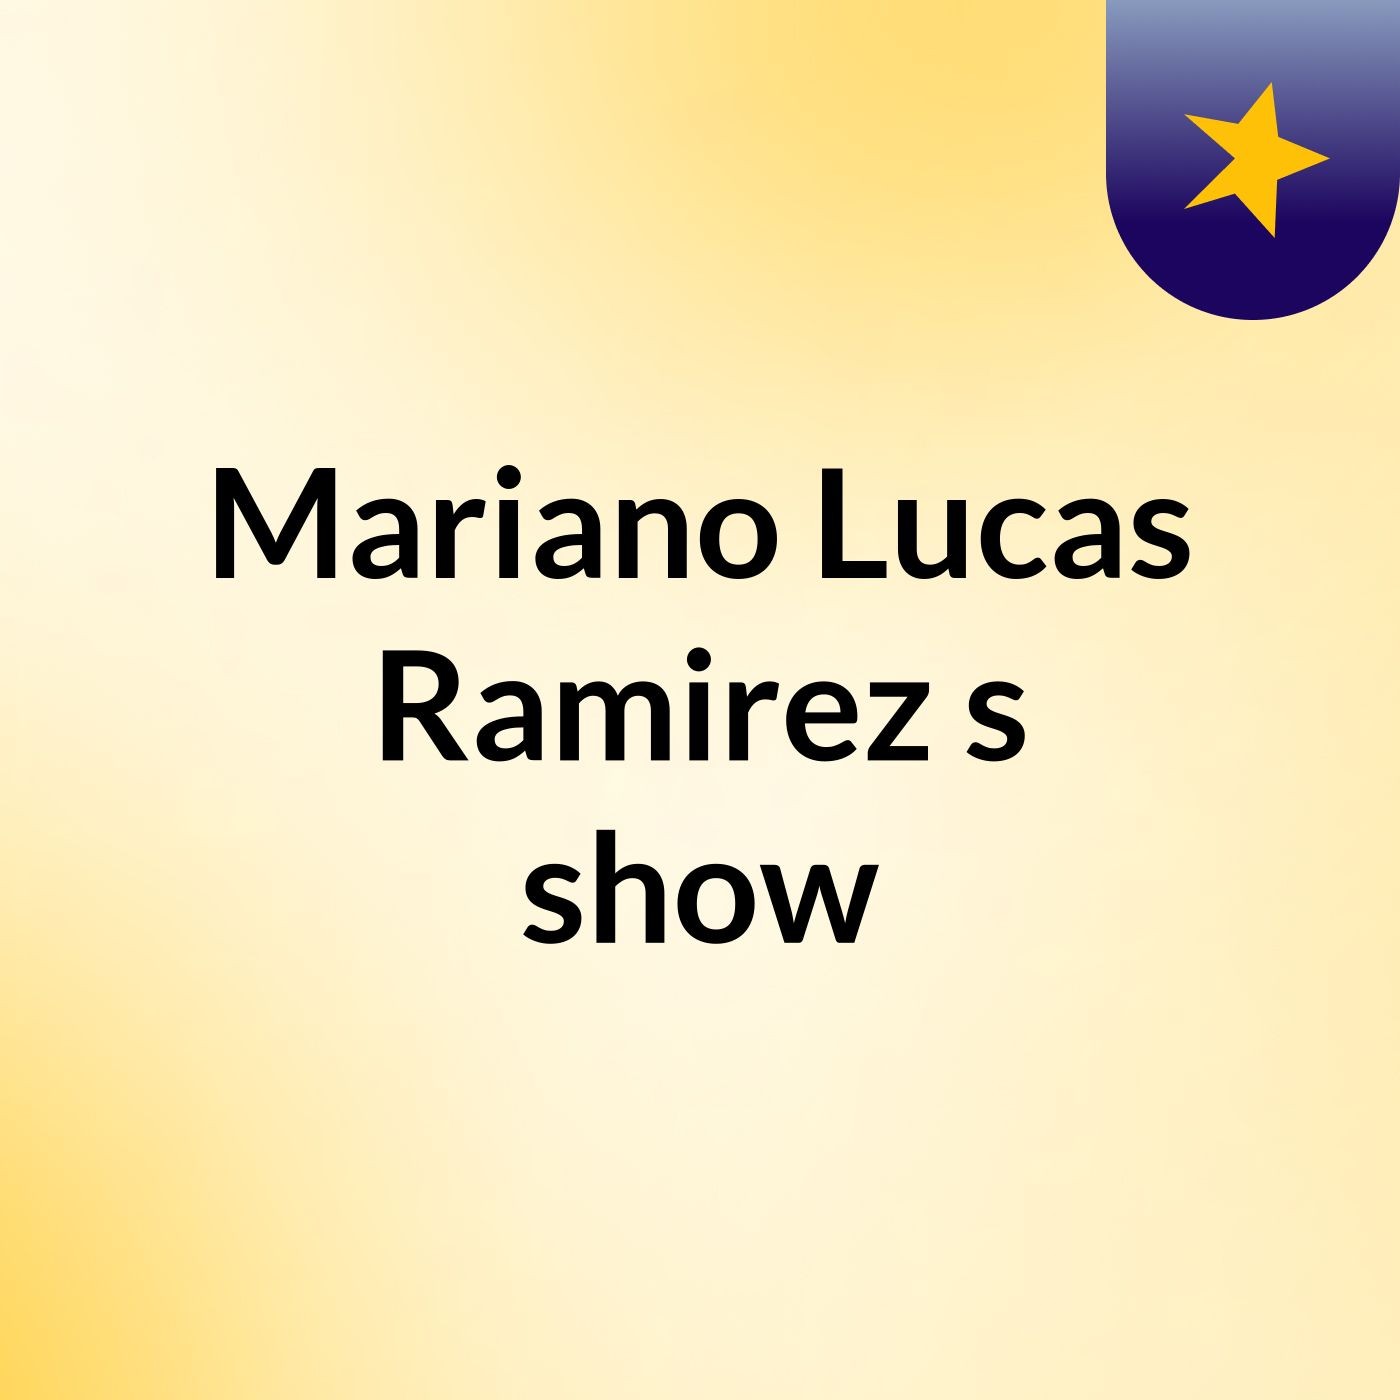 Mariano Lucas Ramirez's show